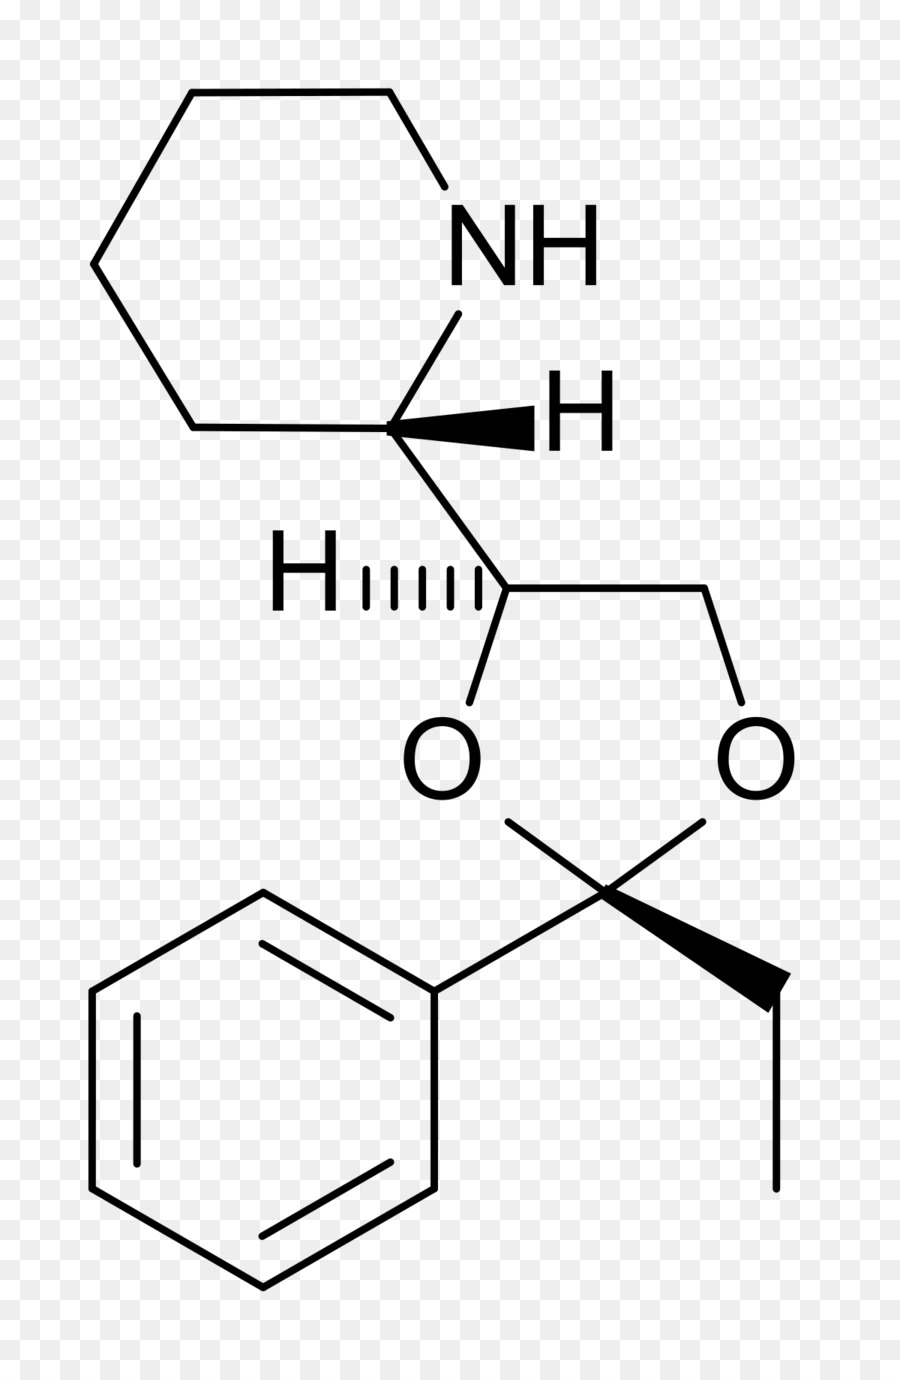 1phényléthylamine，Phénéthylamine PNG